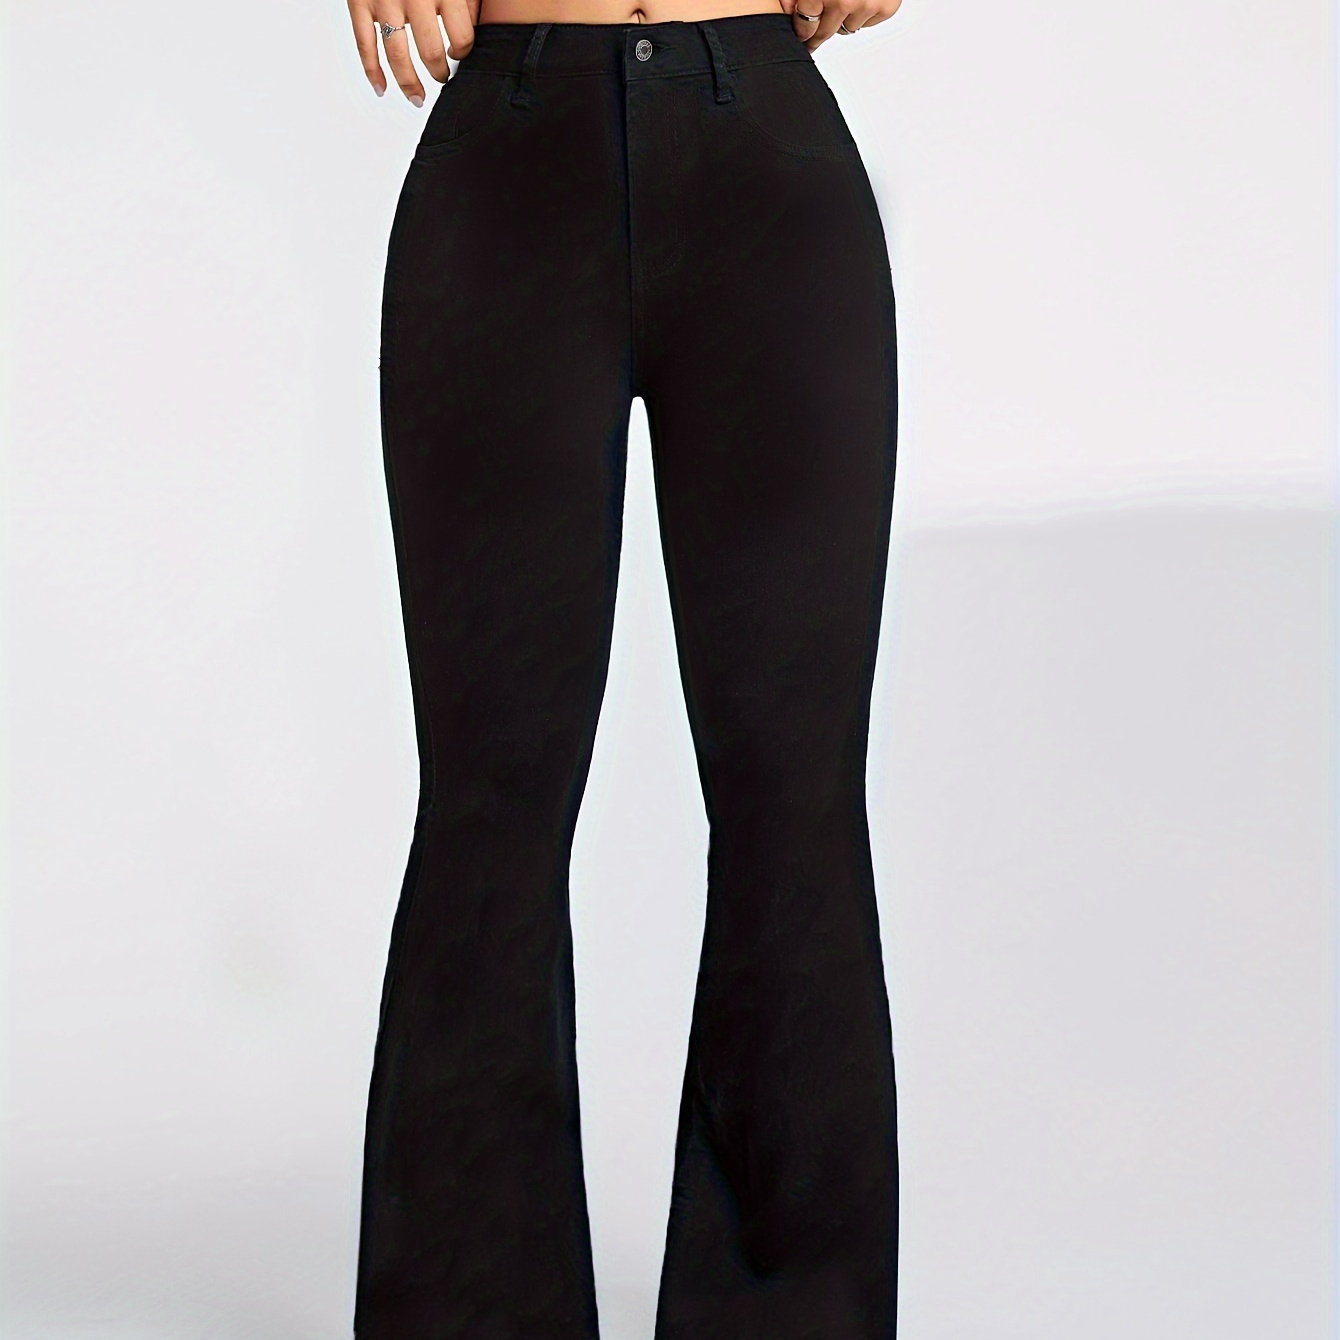 

Elegant Style, High-waisted, Stretch, Slim-fit, Ladies' Flared Bell Bottom Jeans, Versatile Plain Black Color Denim Pants, For Fall